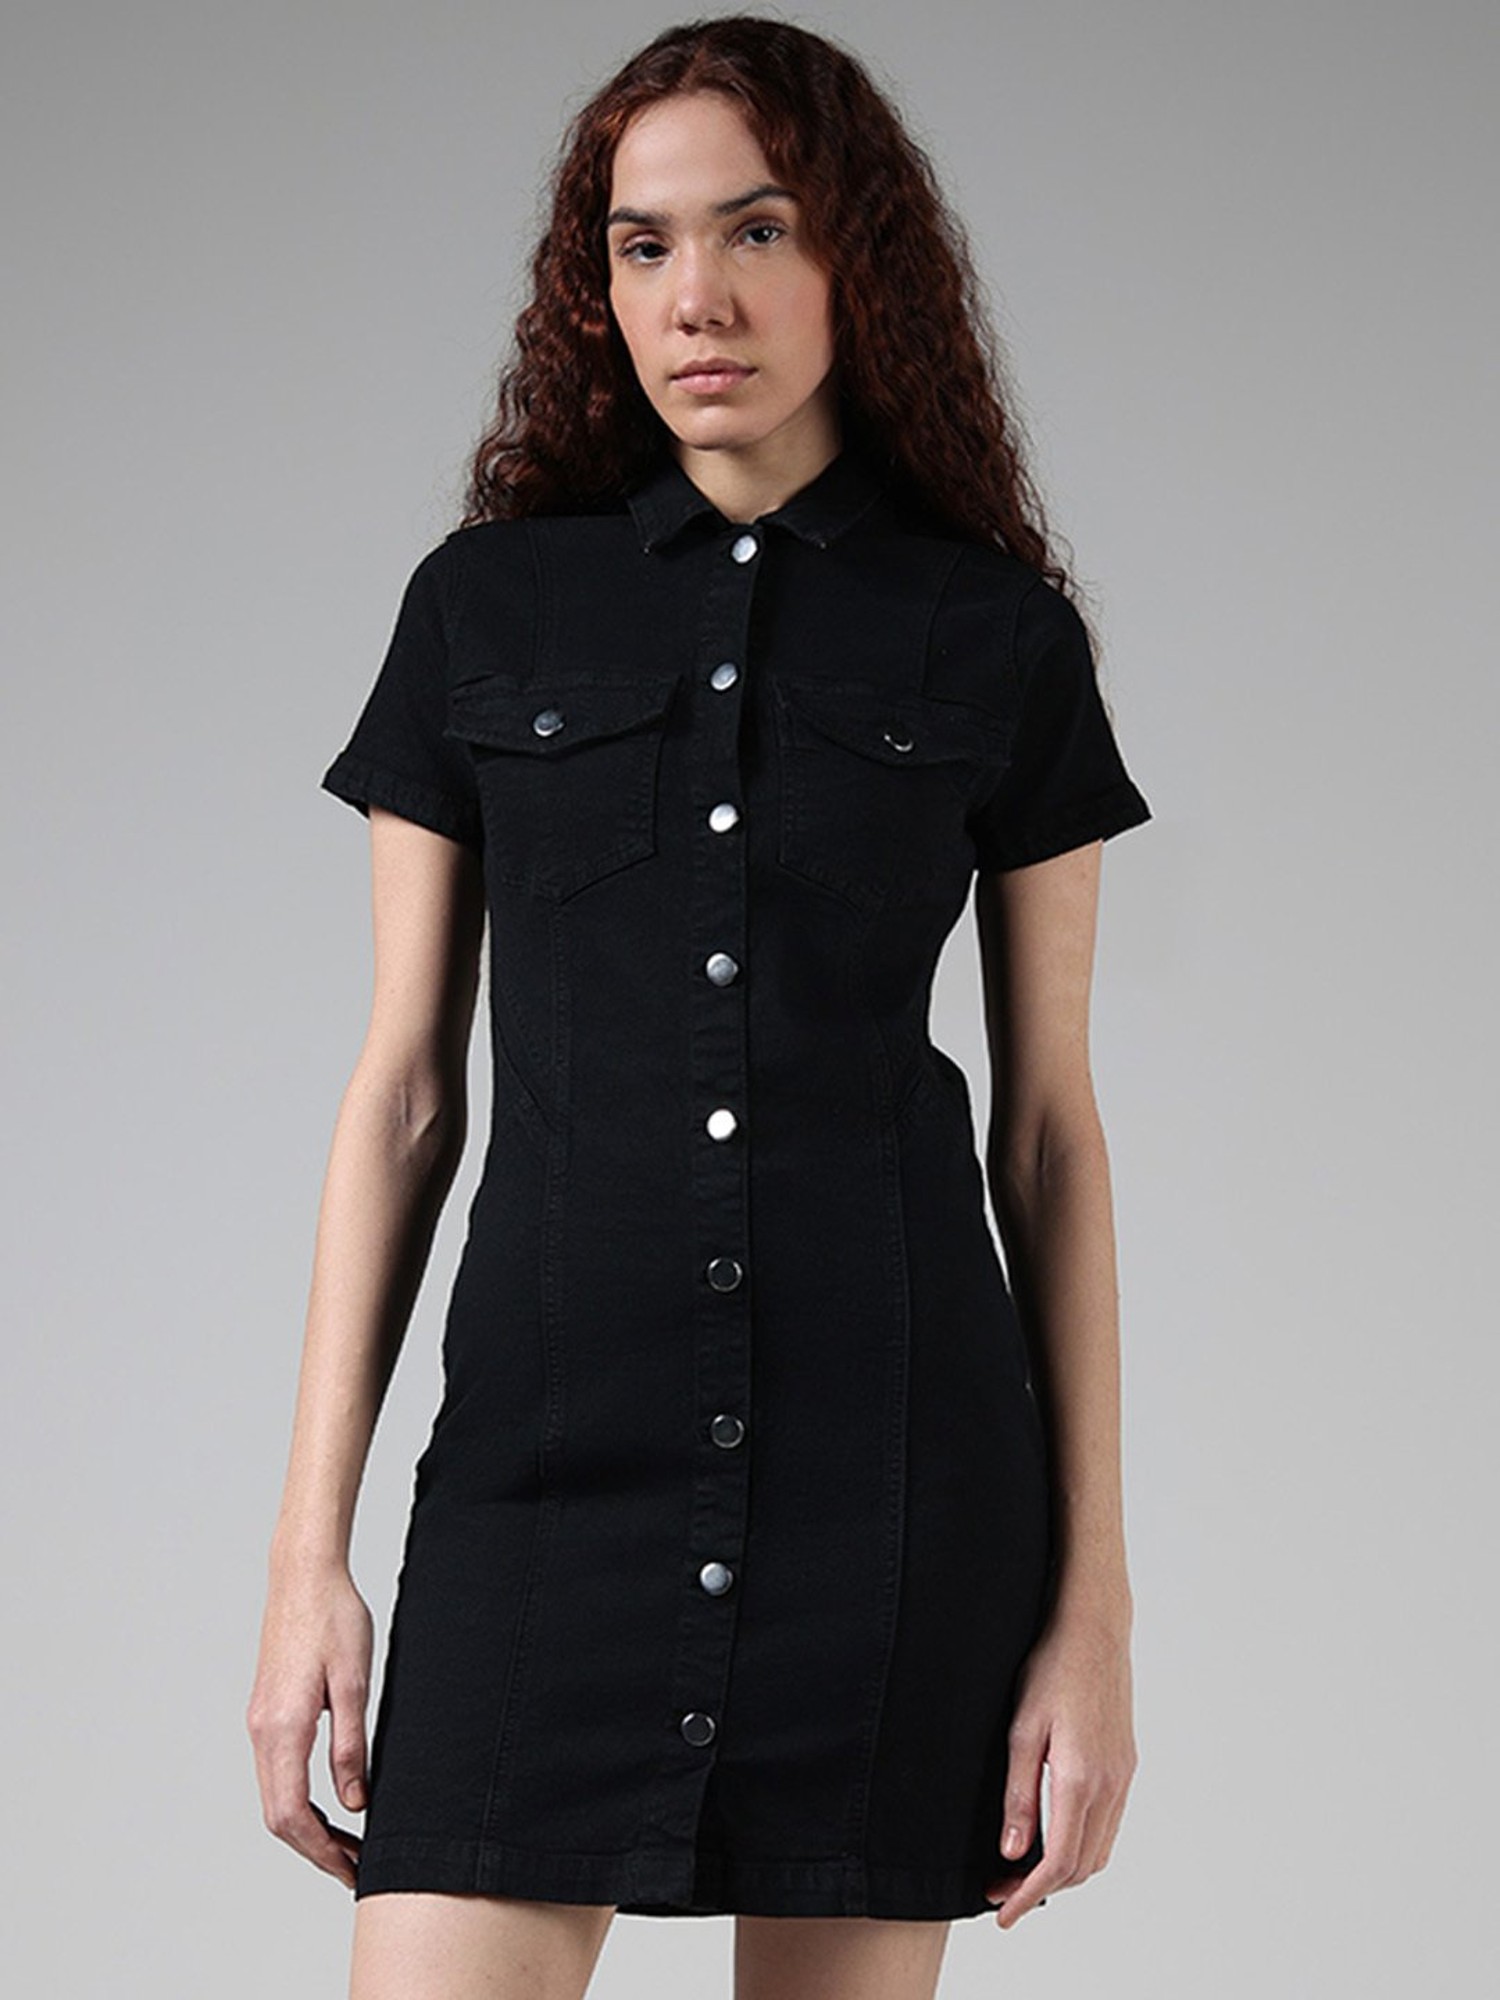 MISSGUIDED Woman's Black Denim Petite Oversized Shirt Dress Size 4 RRP £36  | eBay